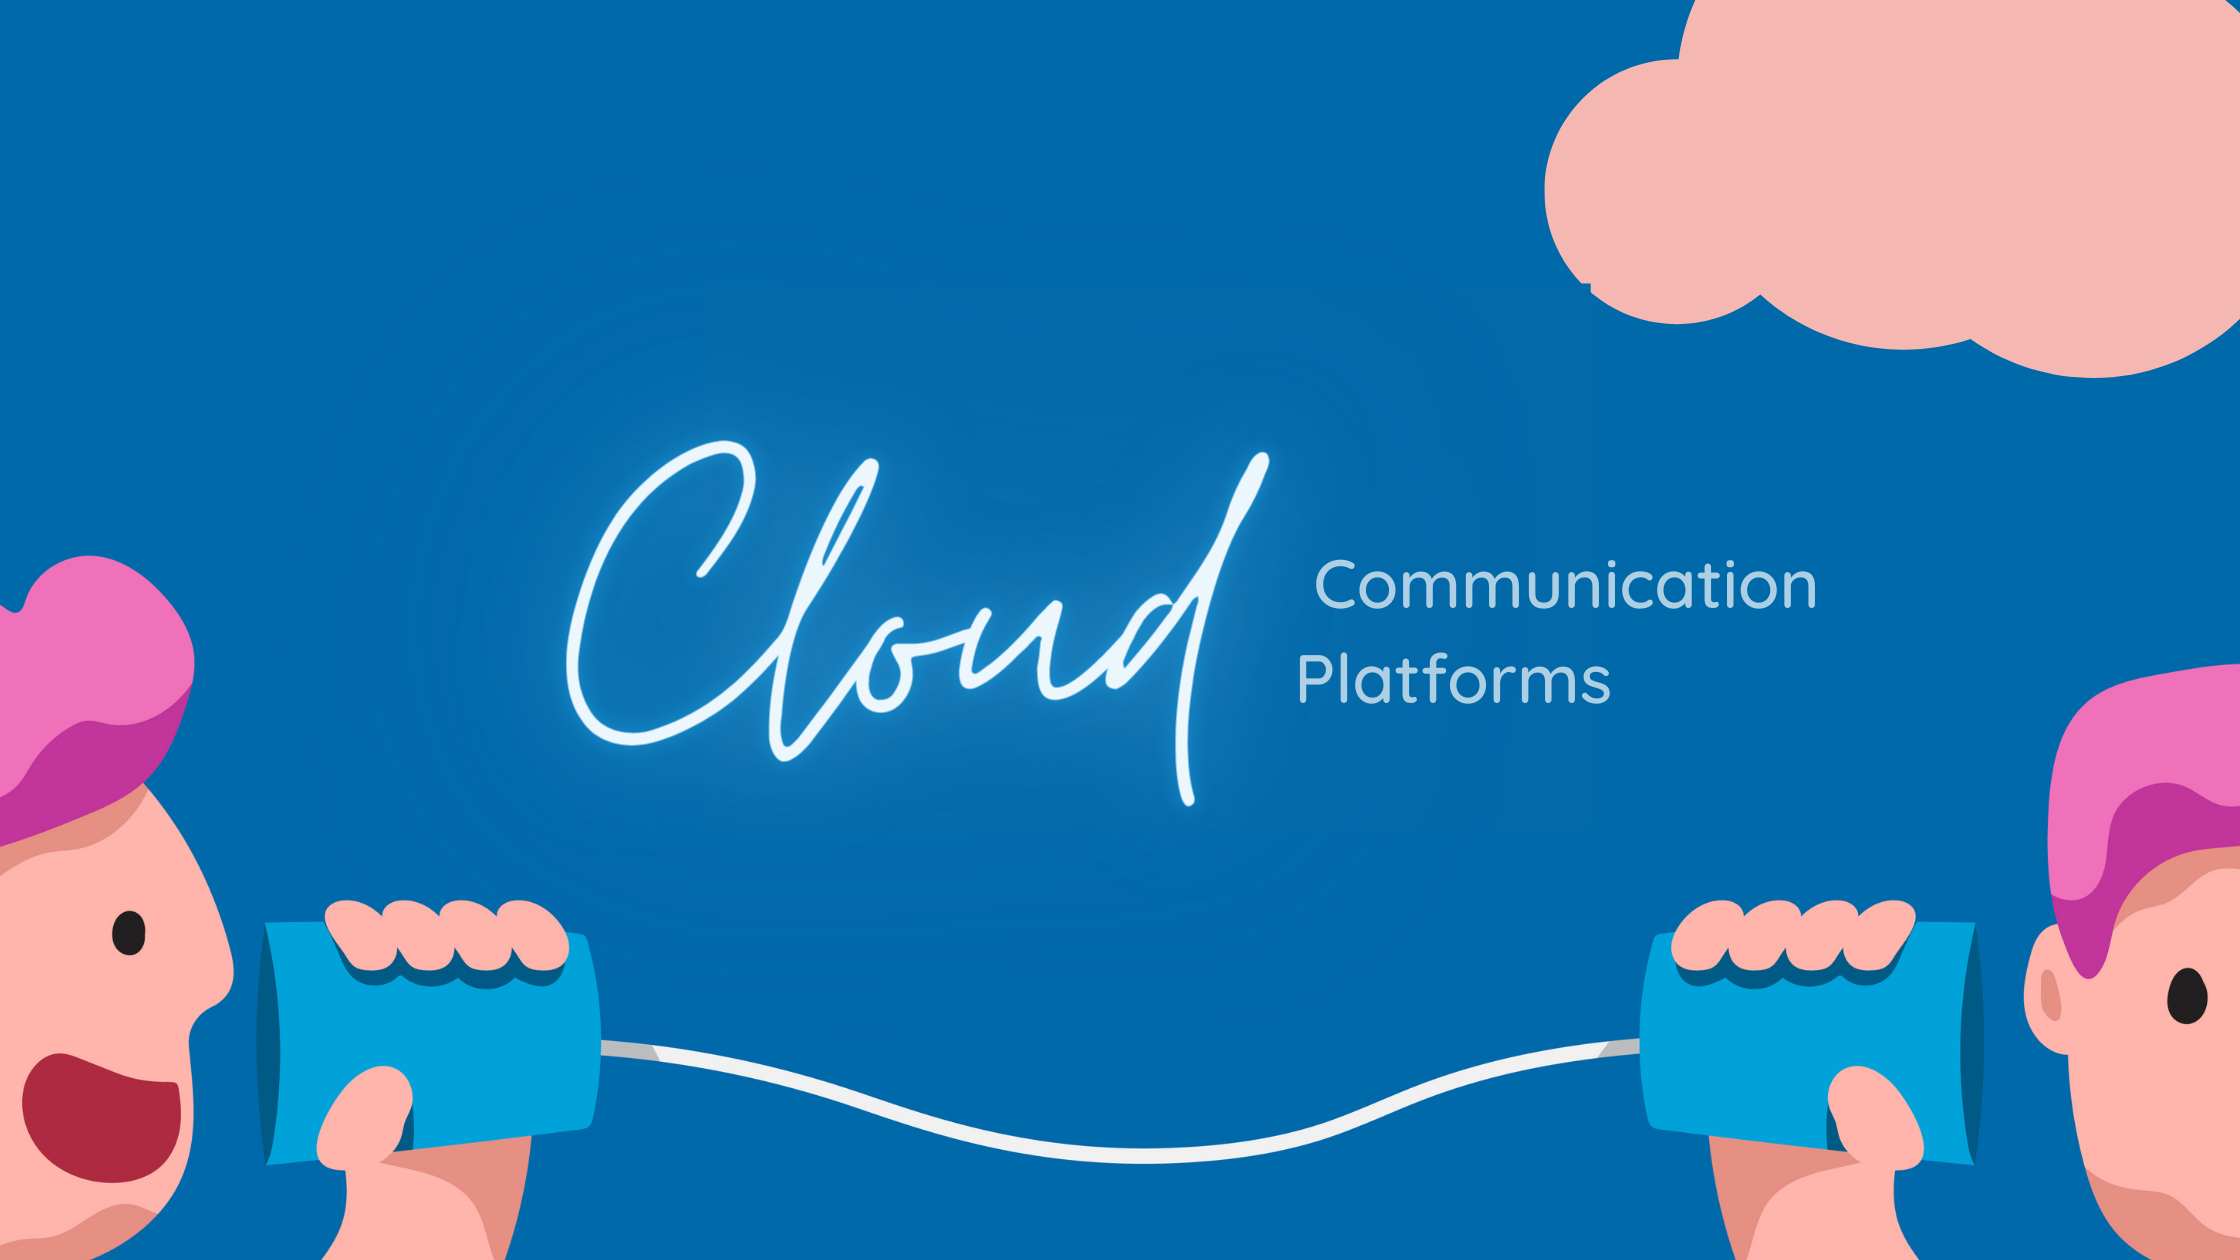 Cloud Communication Platform